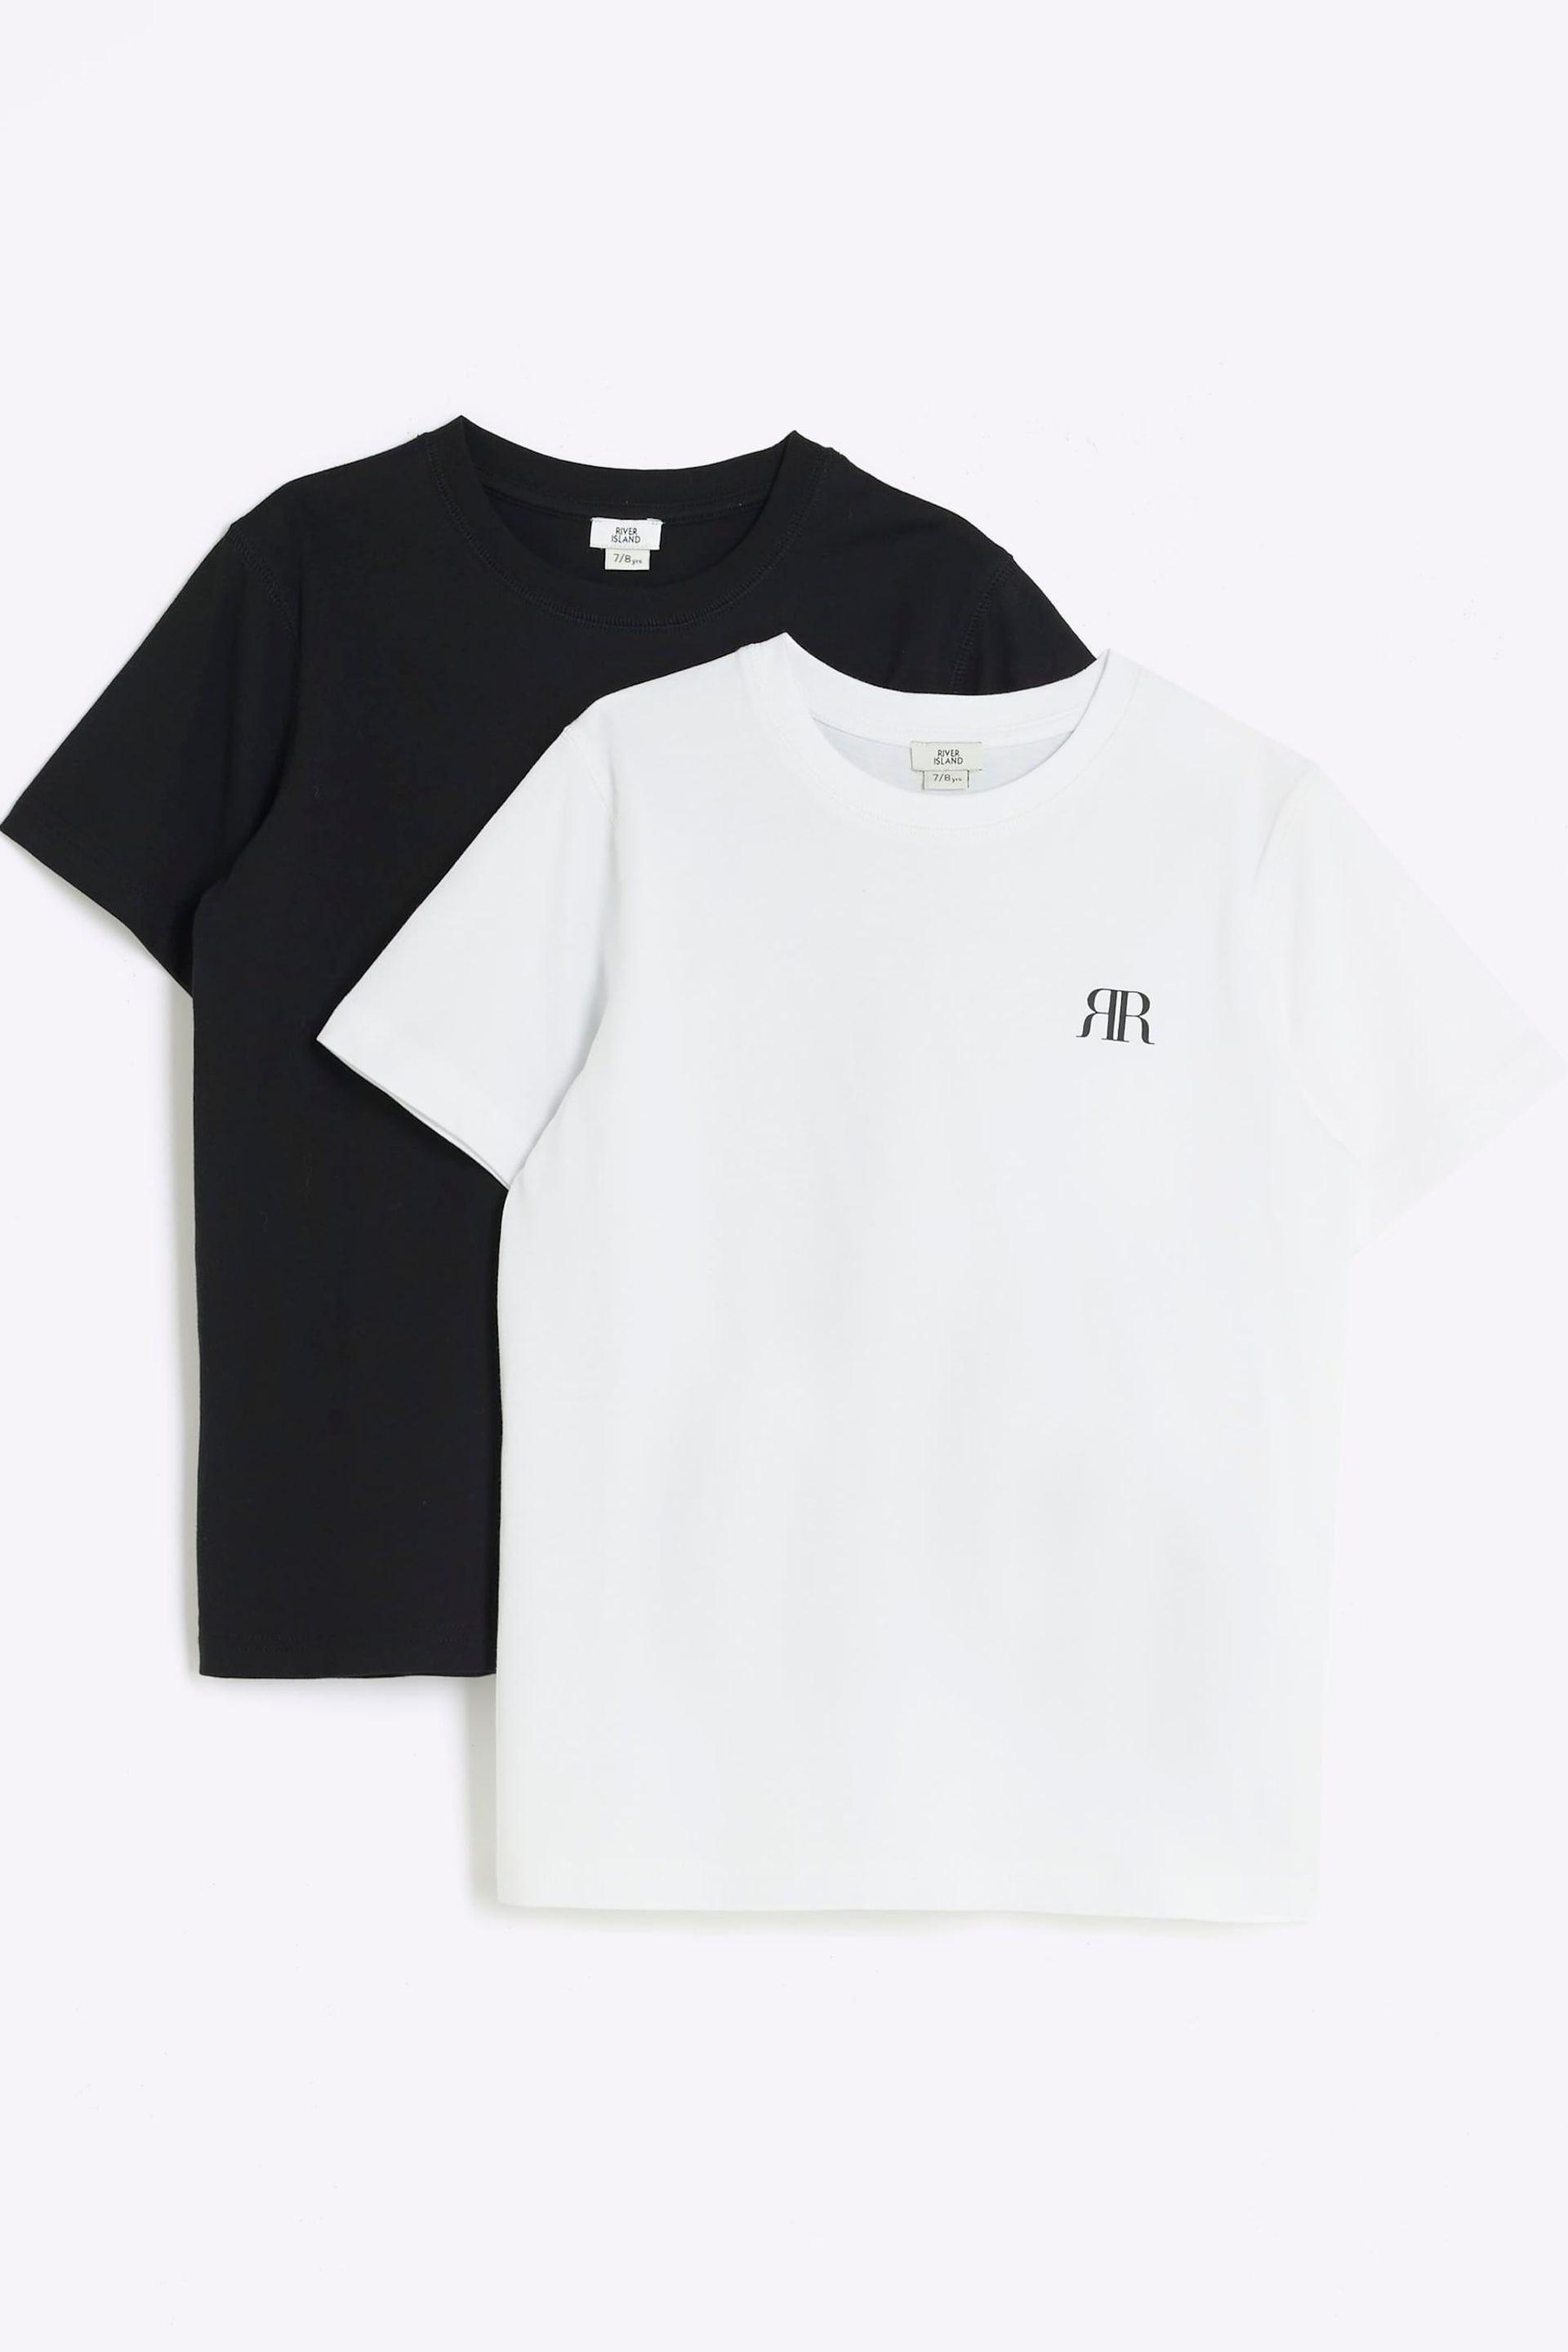 River Island White Boys T-Shirt 2 Packs - Image 1 of 3